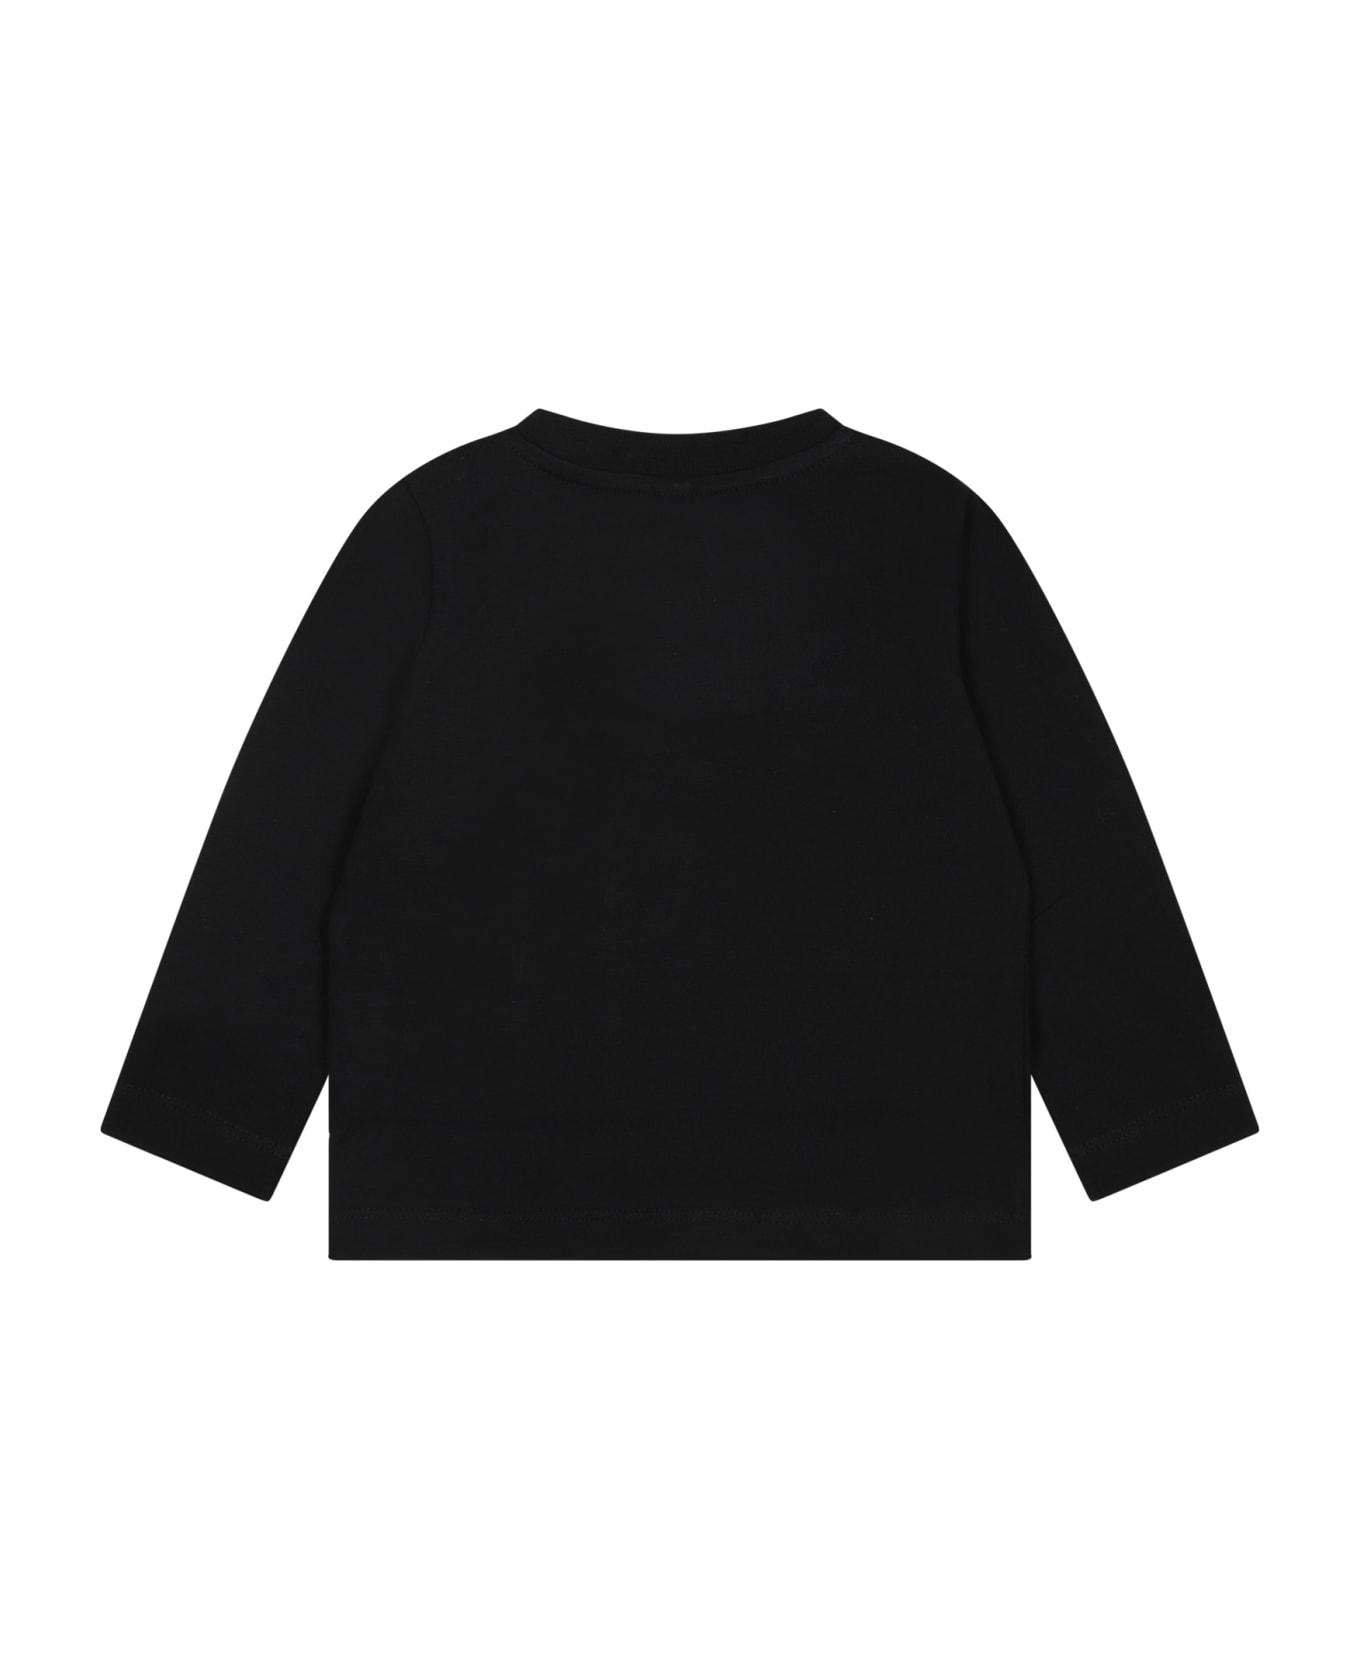 Stella McCartney Kids Black T-shirt For Baby Boy With Logo And Print - Black